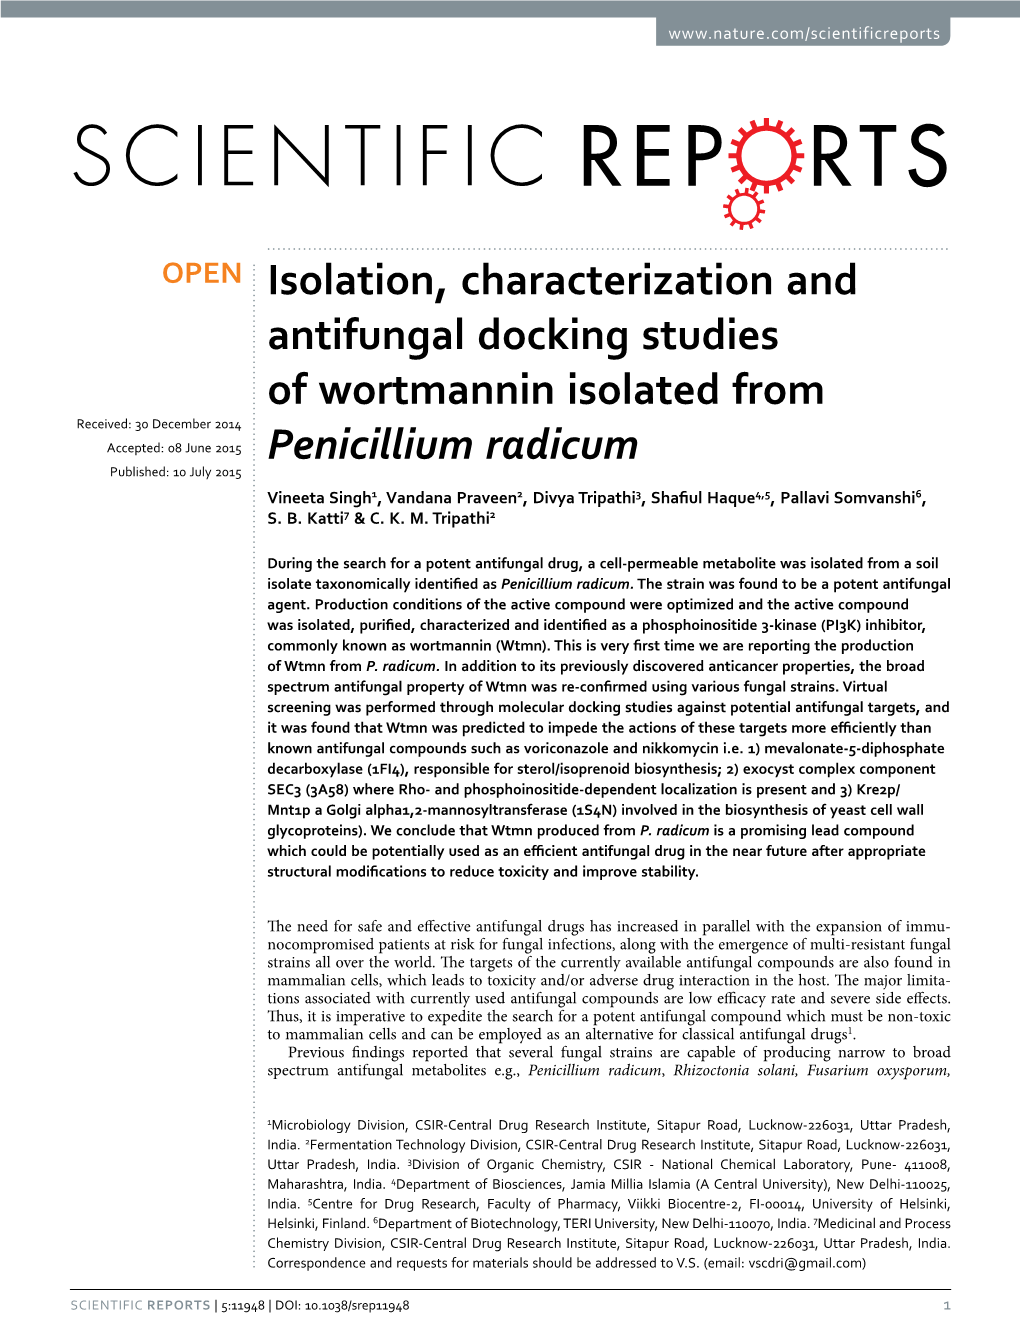 Isolation, Characterization and Antifungal Docking Studies Of